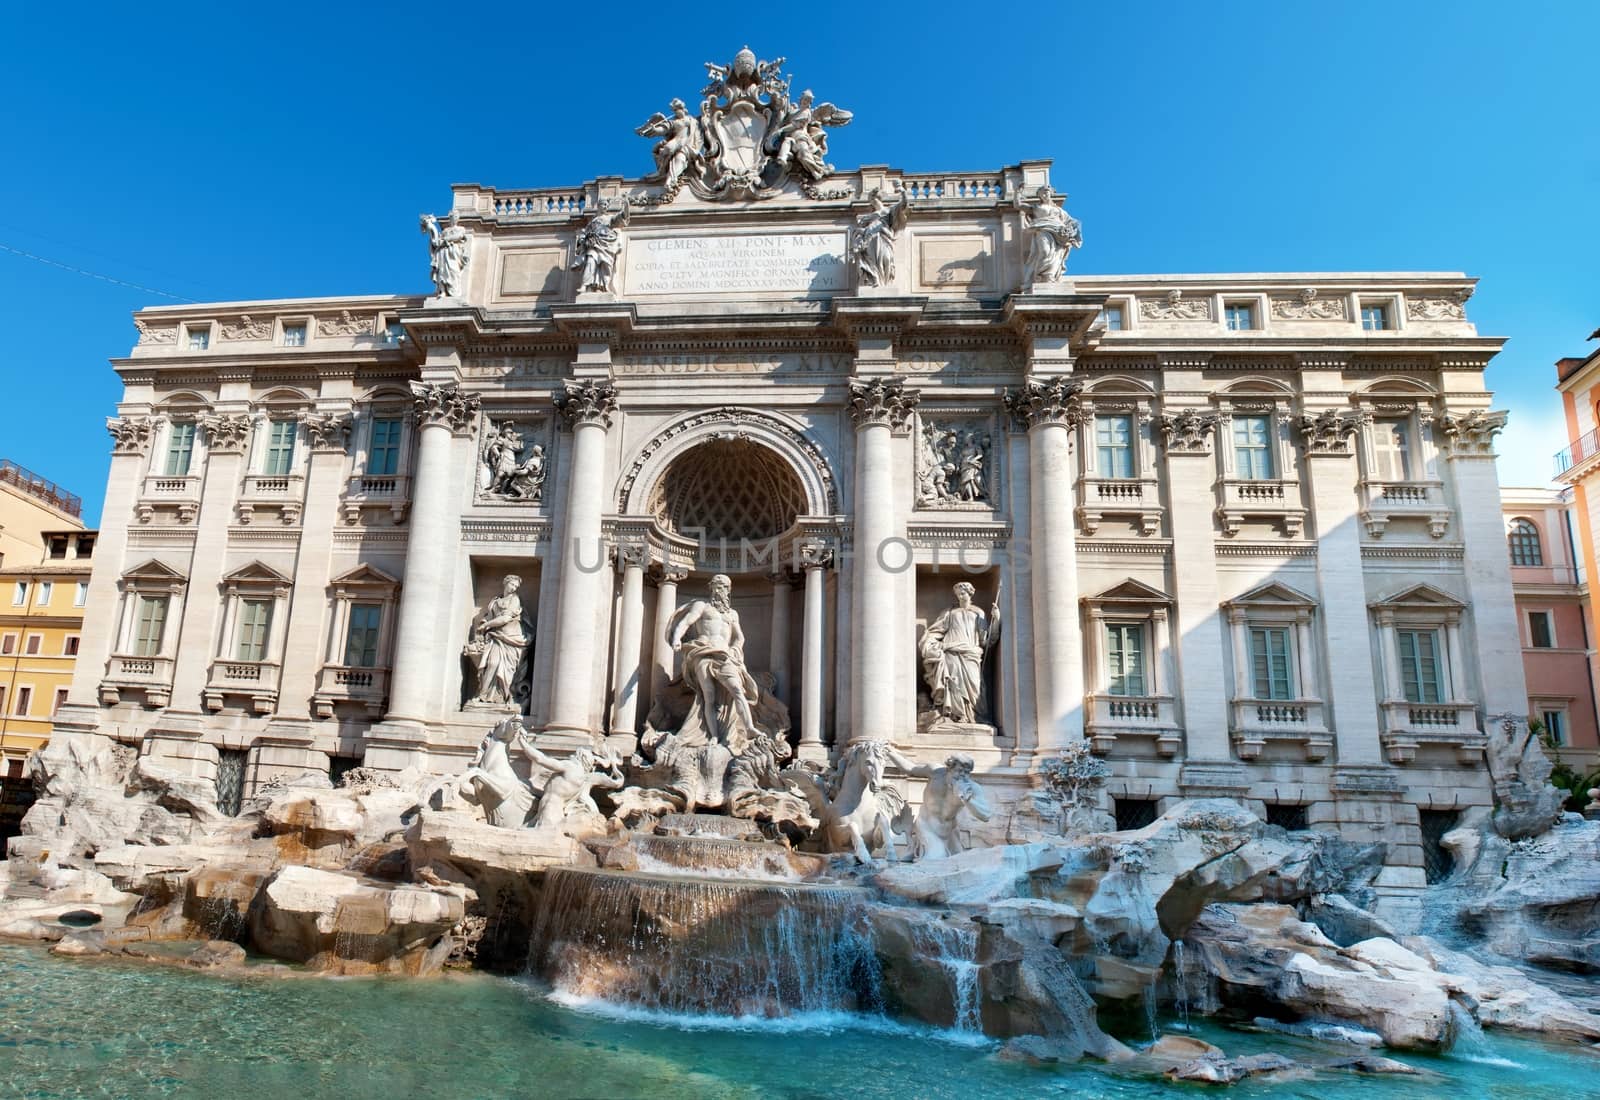 Trevi Fountain, Rome by mitakag